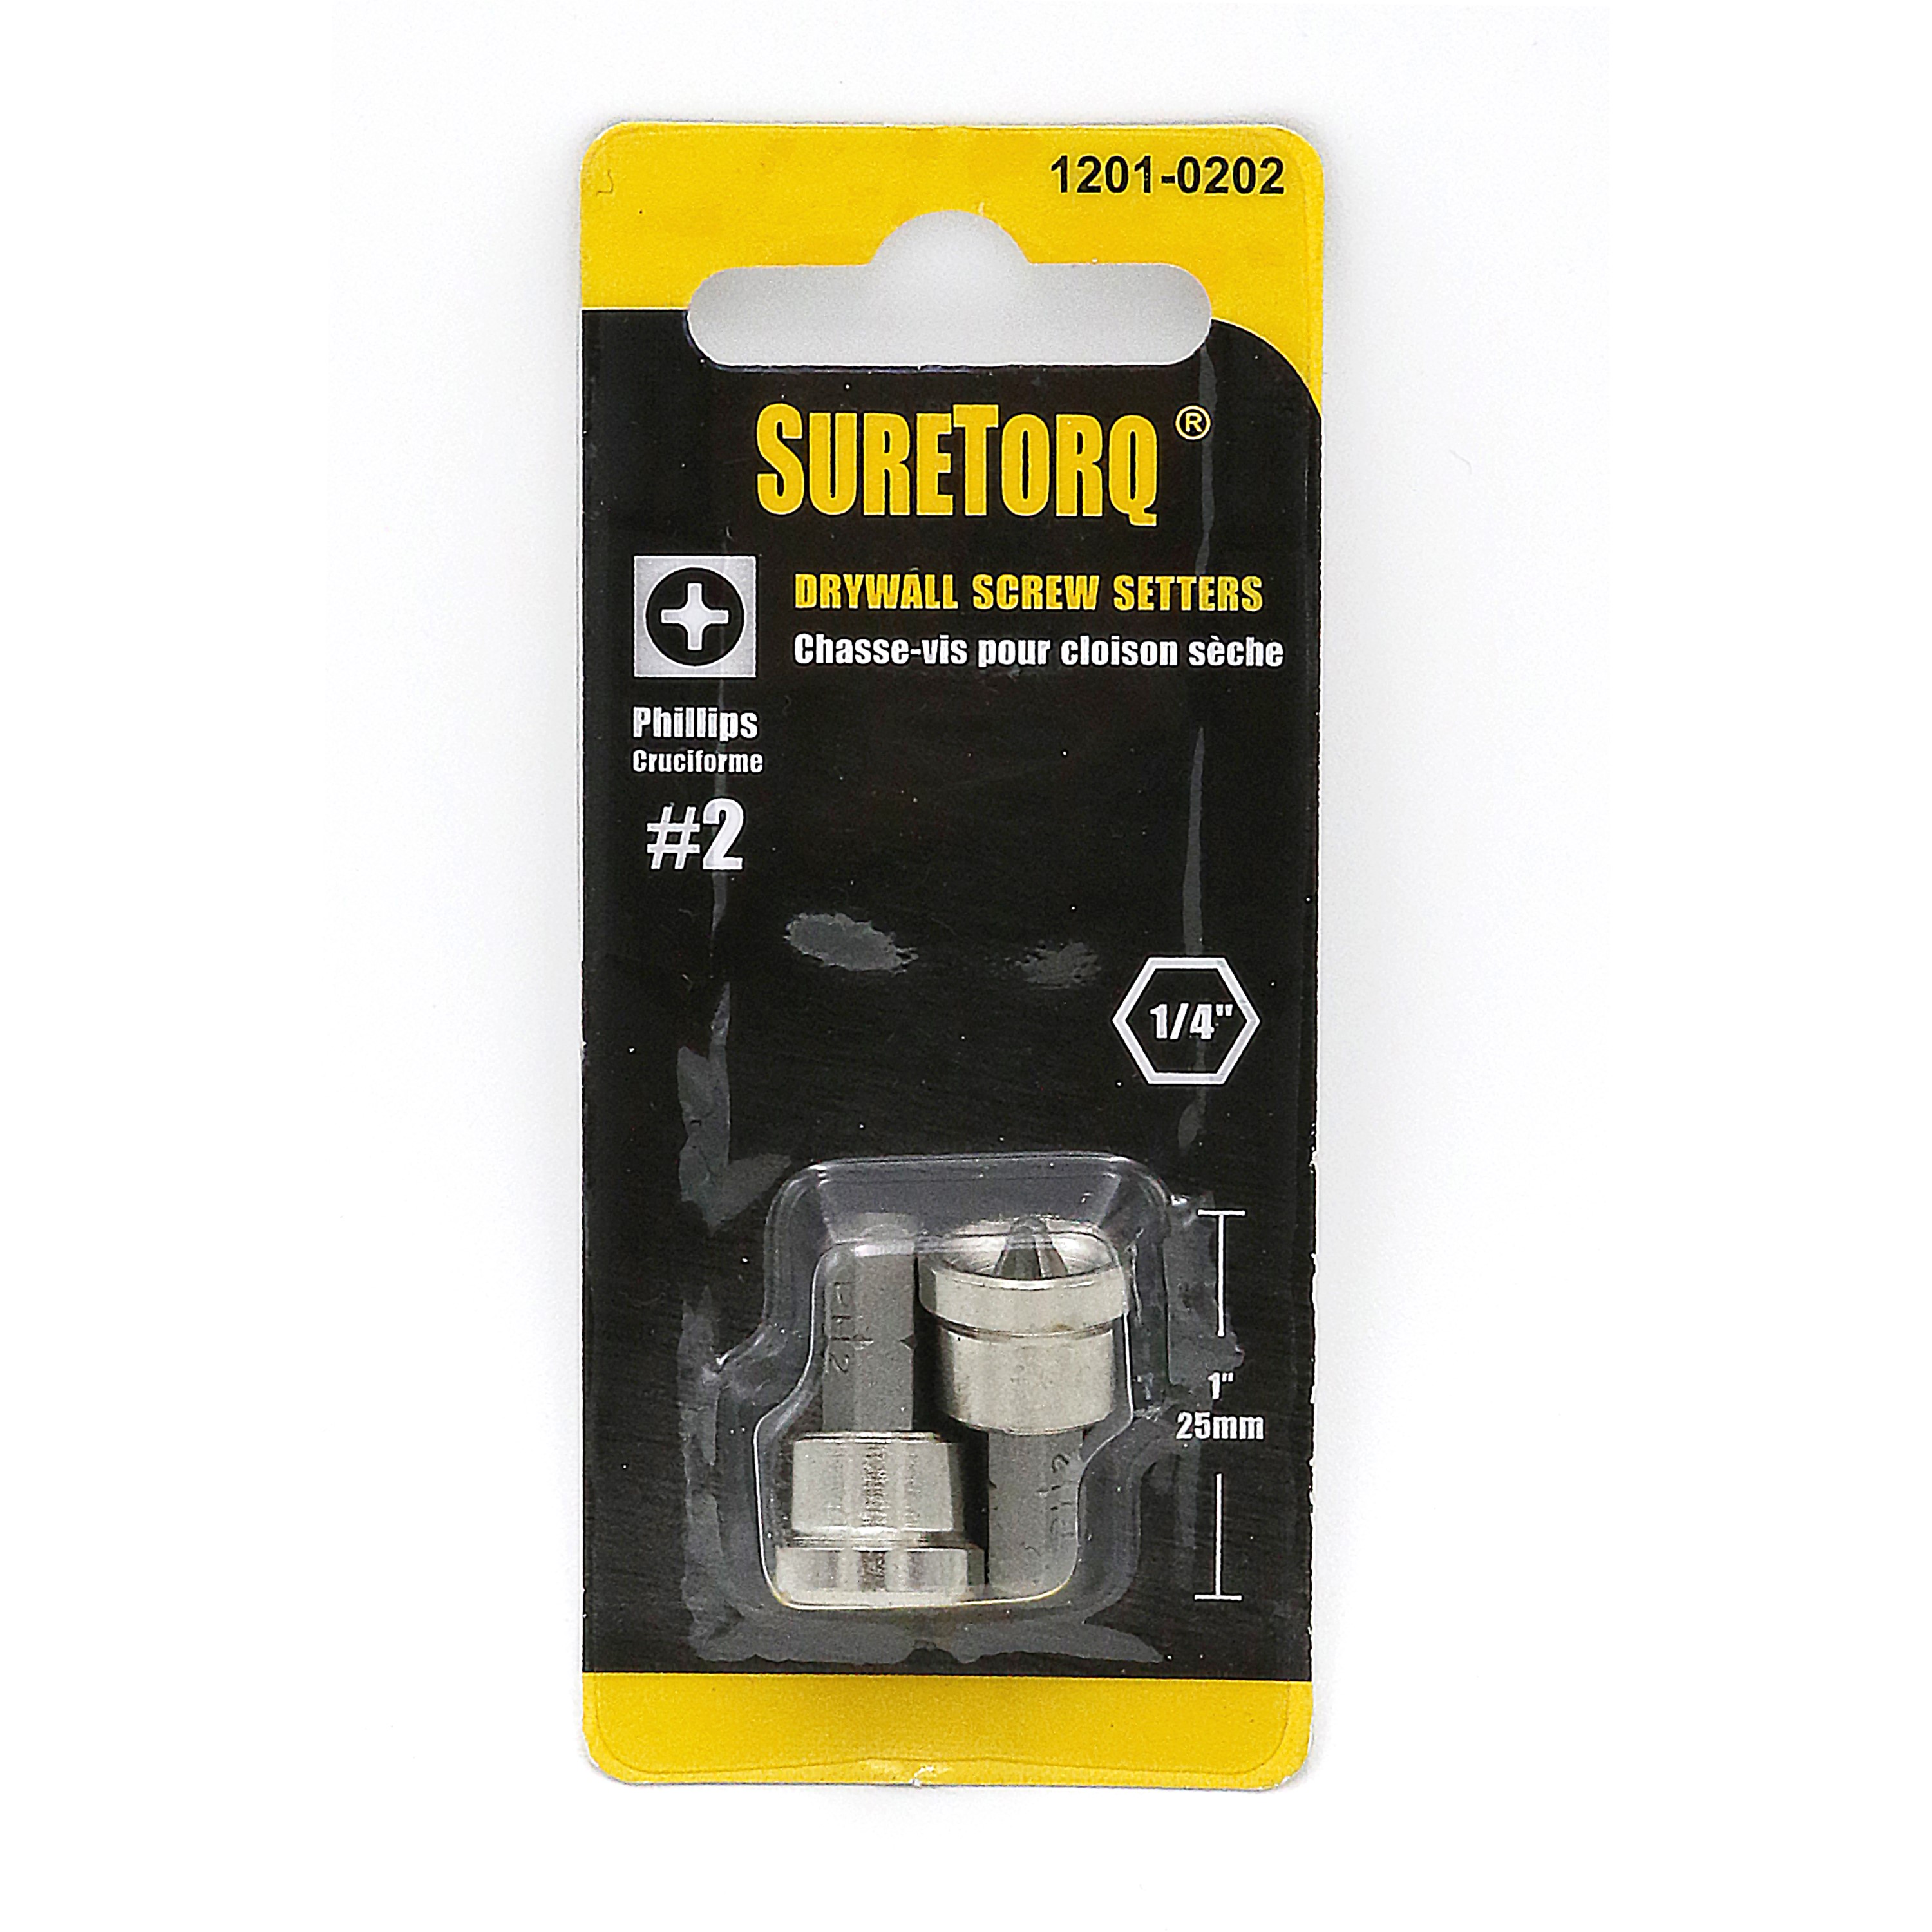 Suretorq - 1201-0202 - 2pcs Drywall Screwsetter Card